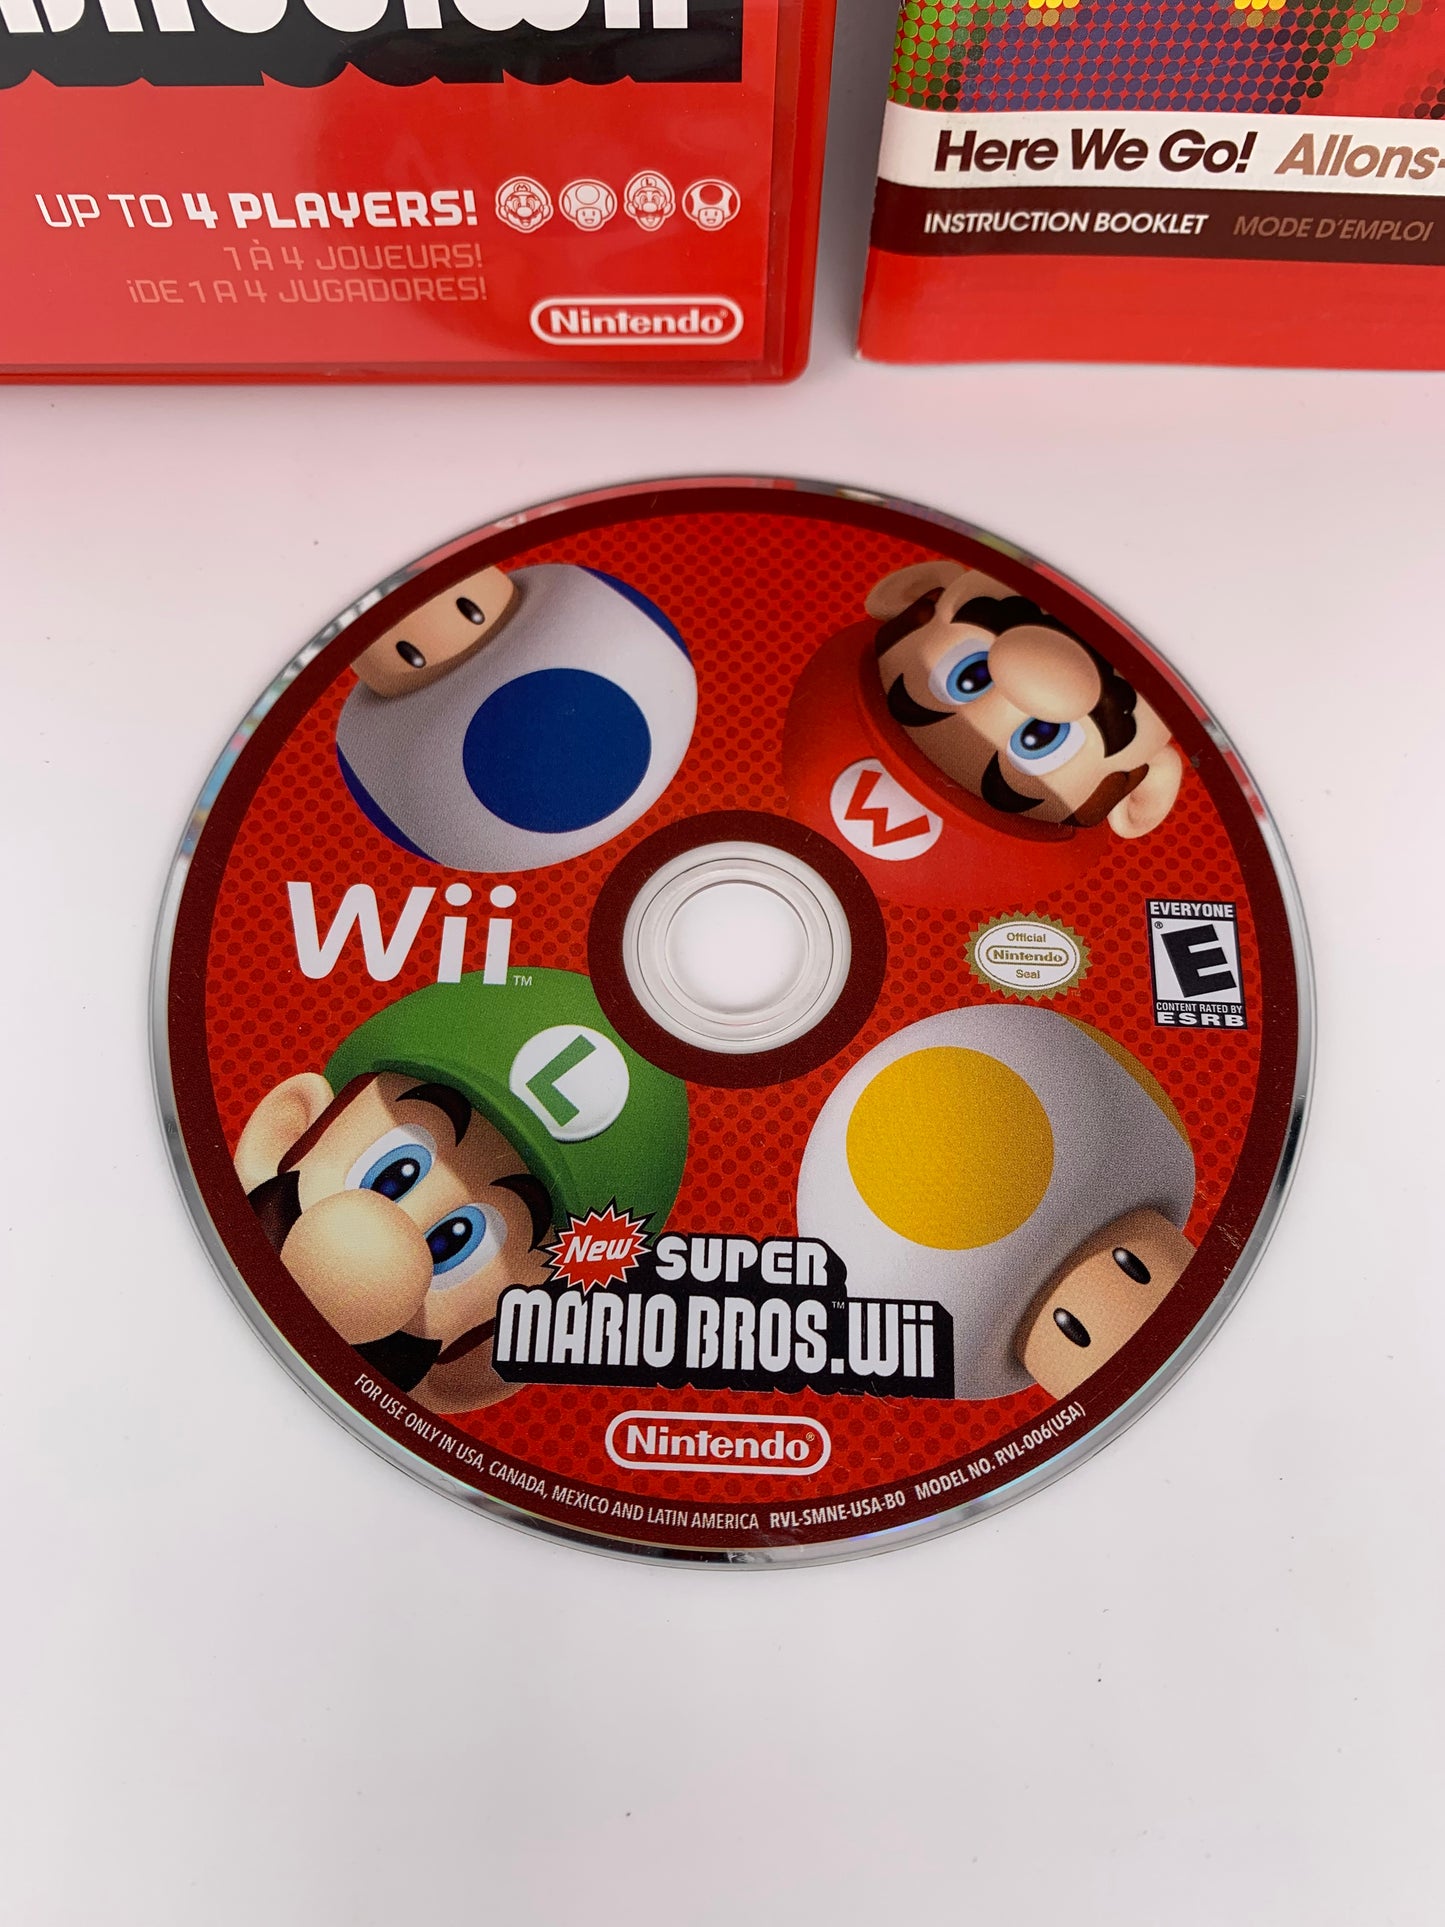 NiNTENDO Wii | NEW SUPER MARiO BROS Wii